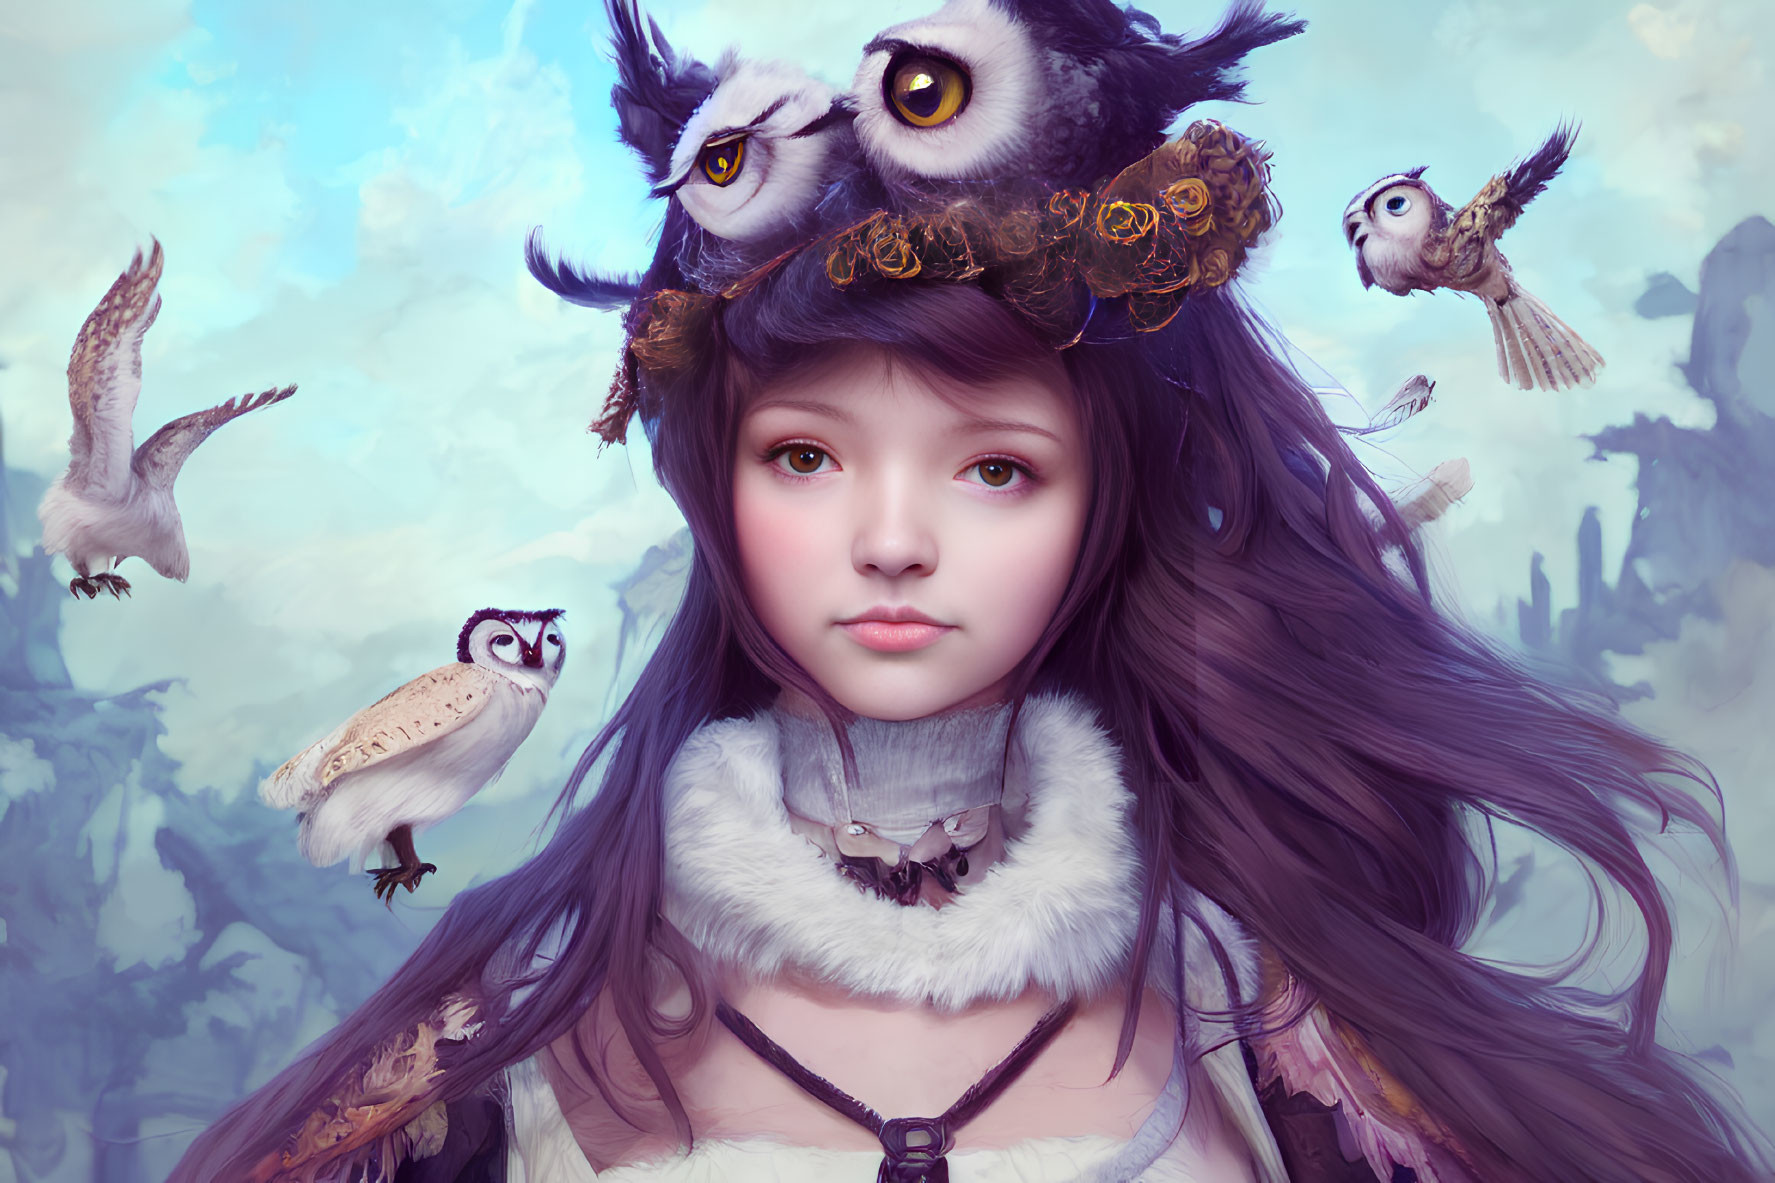 Dark-haired girl with owls in dreamlike landscape.